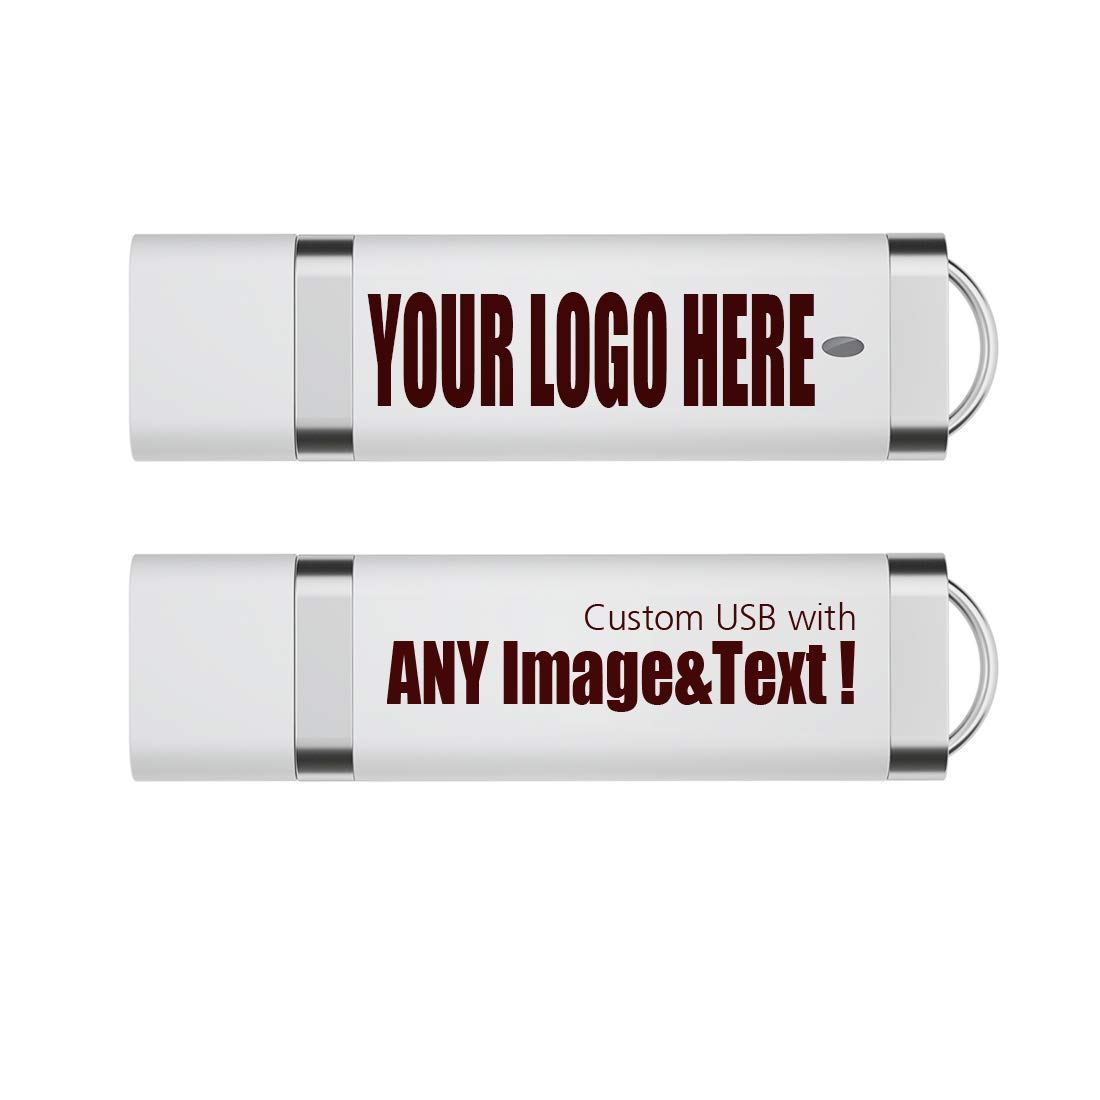 50PCS 1GB Custom USB Flash Drive Personalized Thumb Drive Logo Printed USB,50 Pack